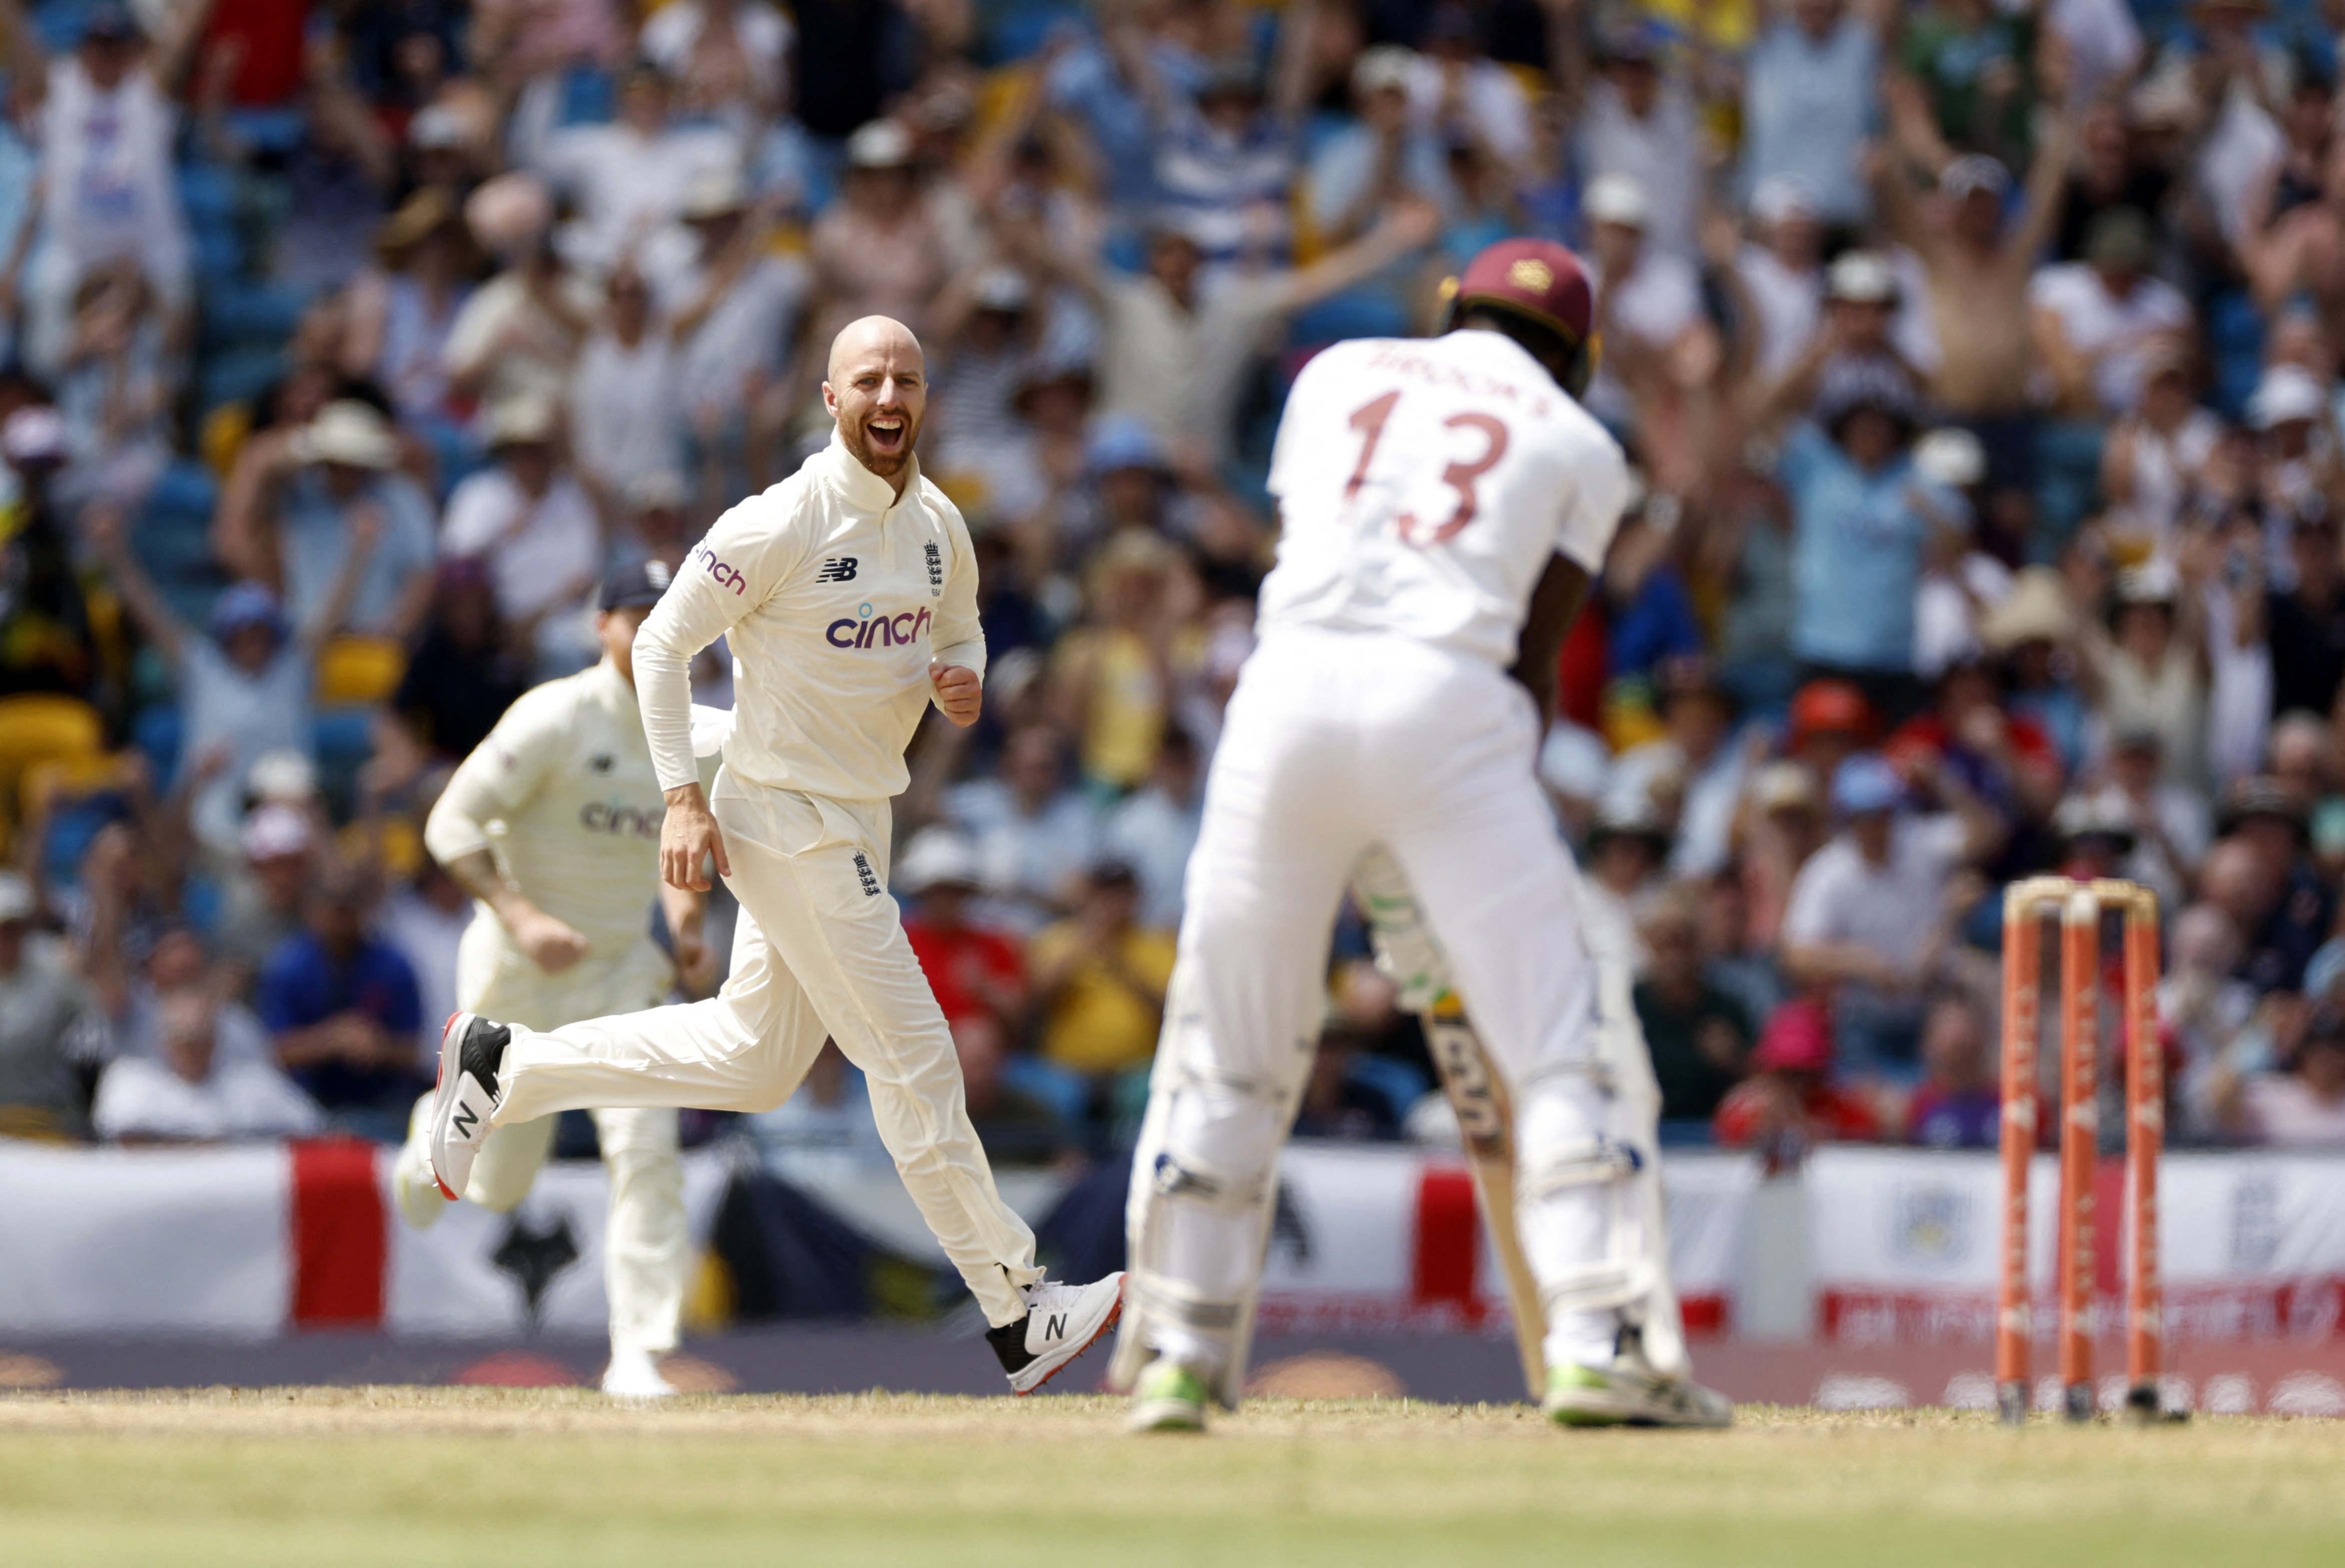 Second Test - West Indies v England